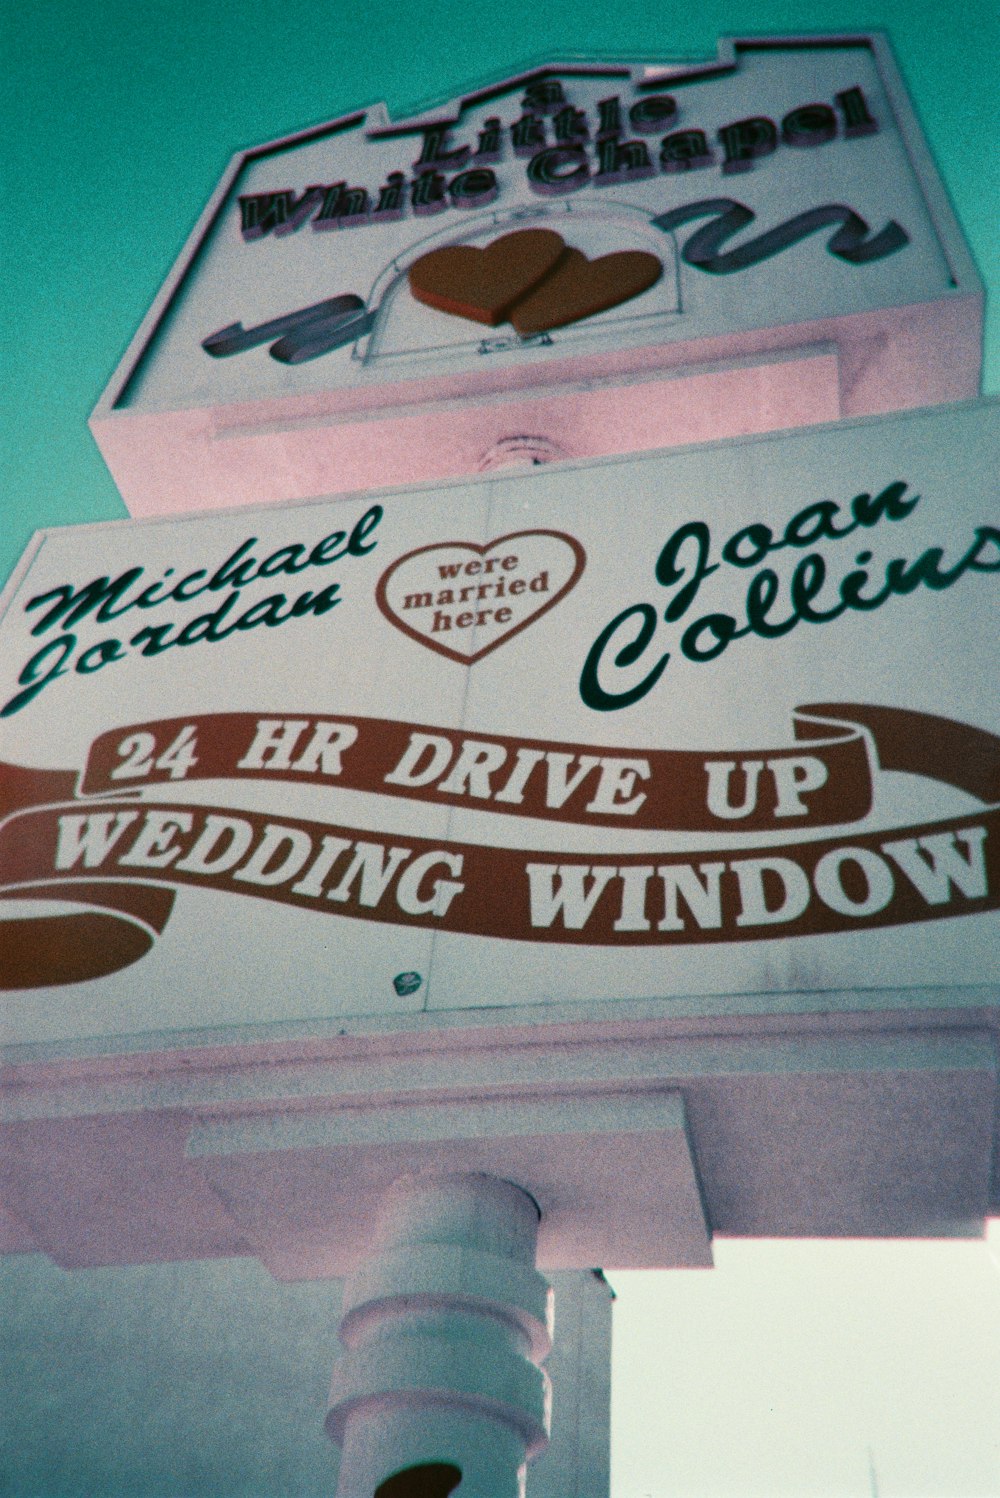 a close up of a sign for a wedding venue